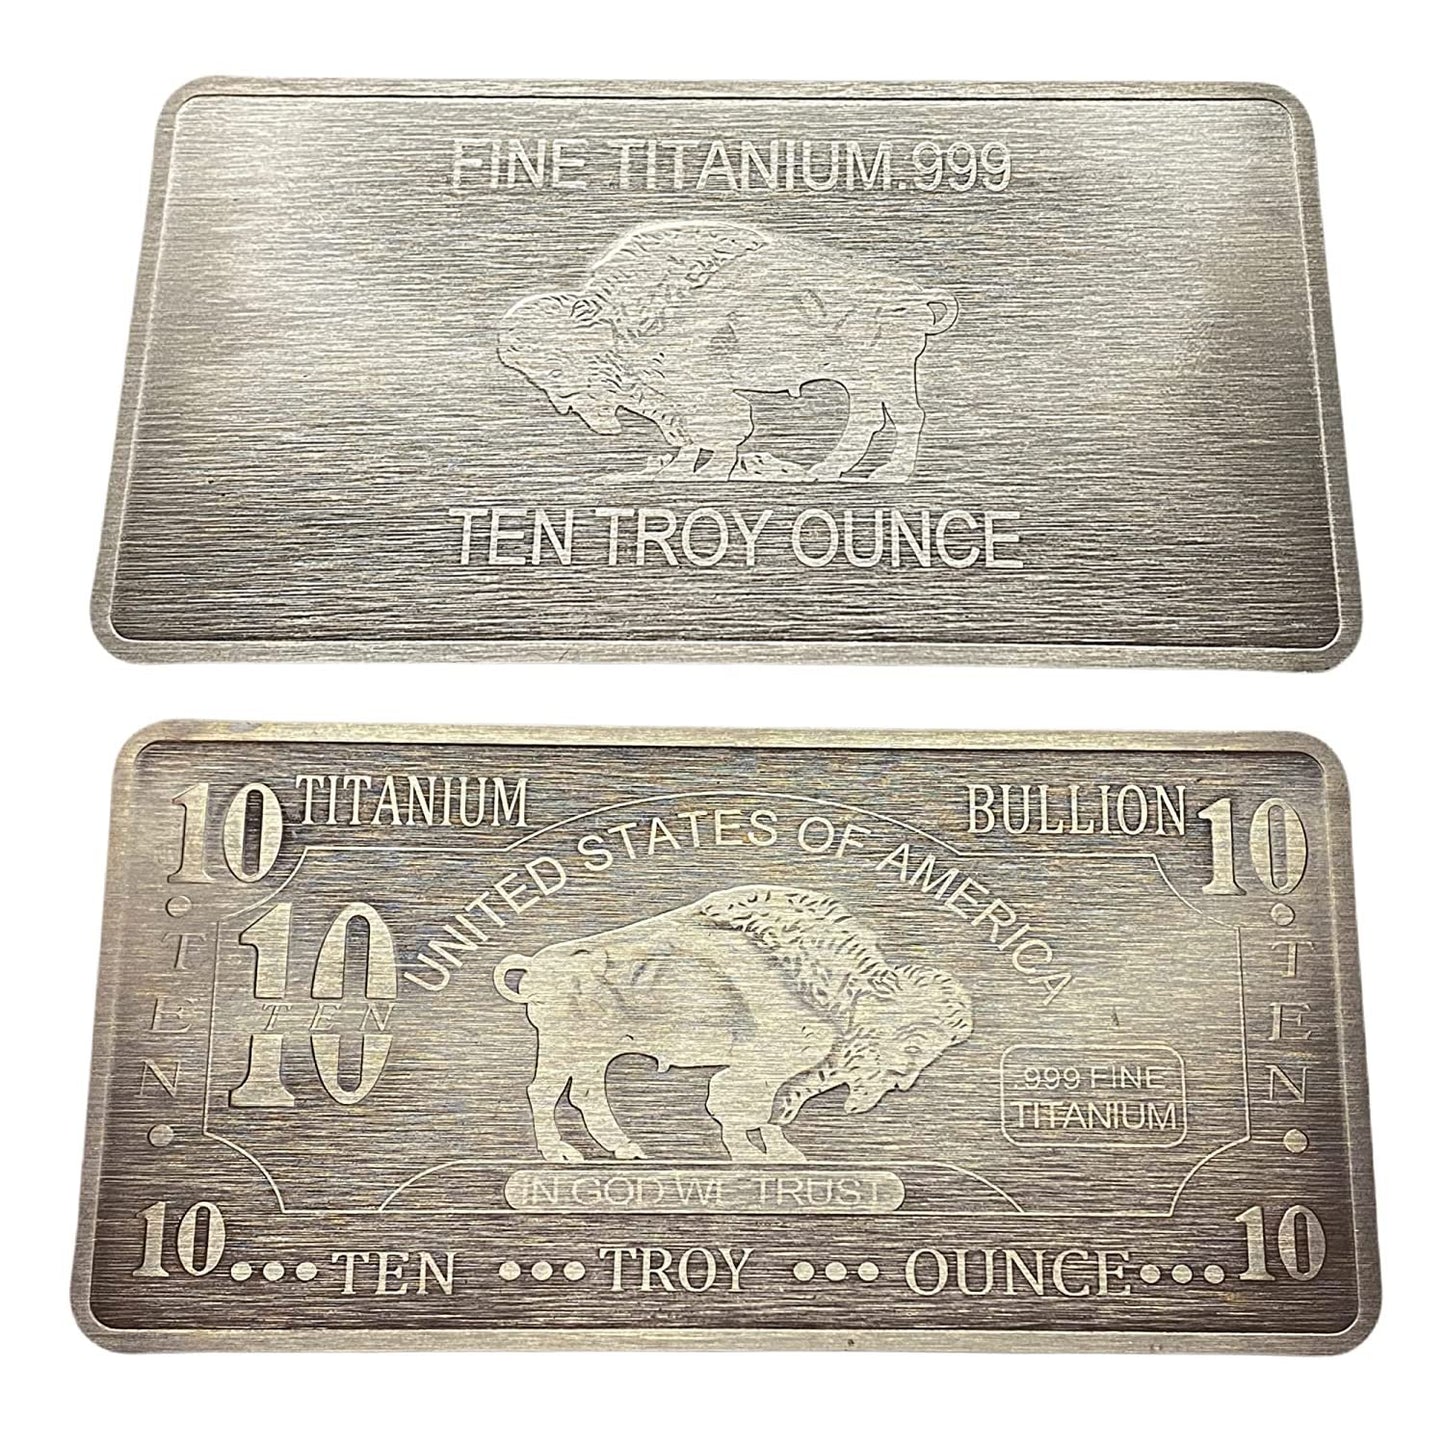 10 Ounce OZ 999 Fine Solid Titanium Precious Metal American Buffalo Bar Ingot Bullion Ti Element Chemistry Proof Mint Coin